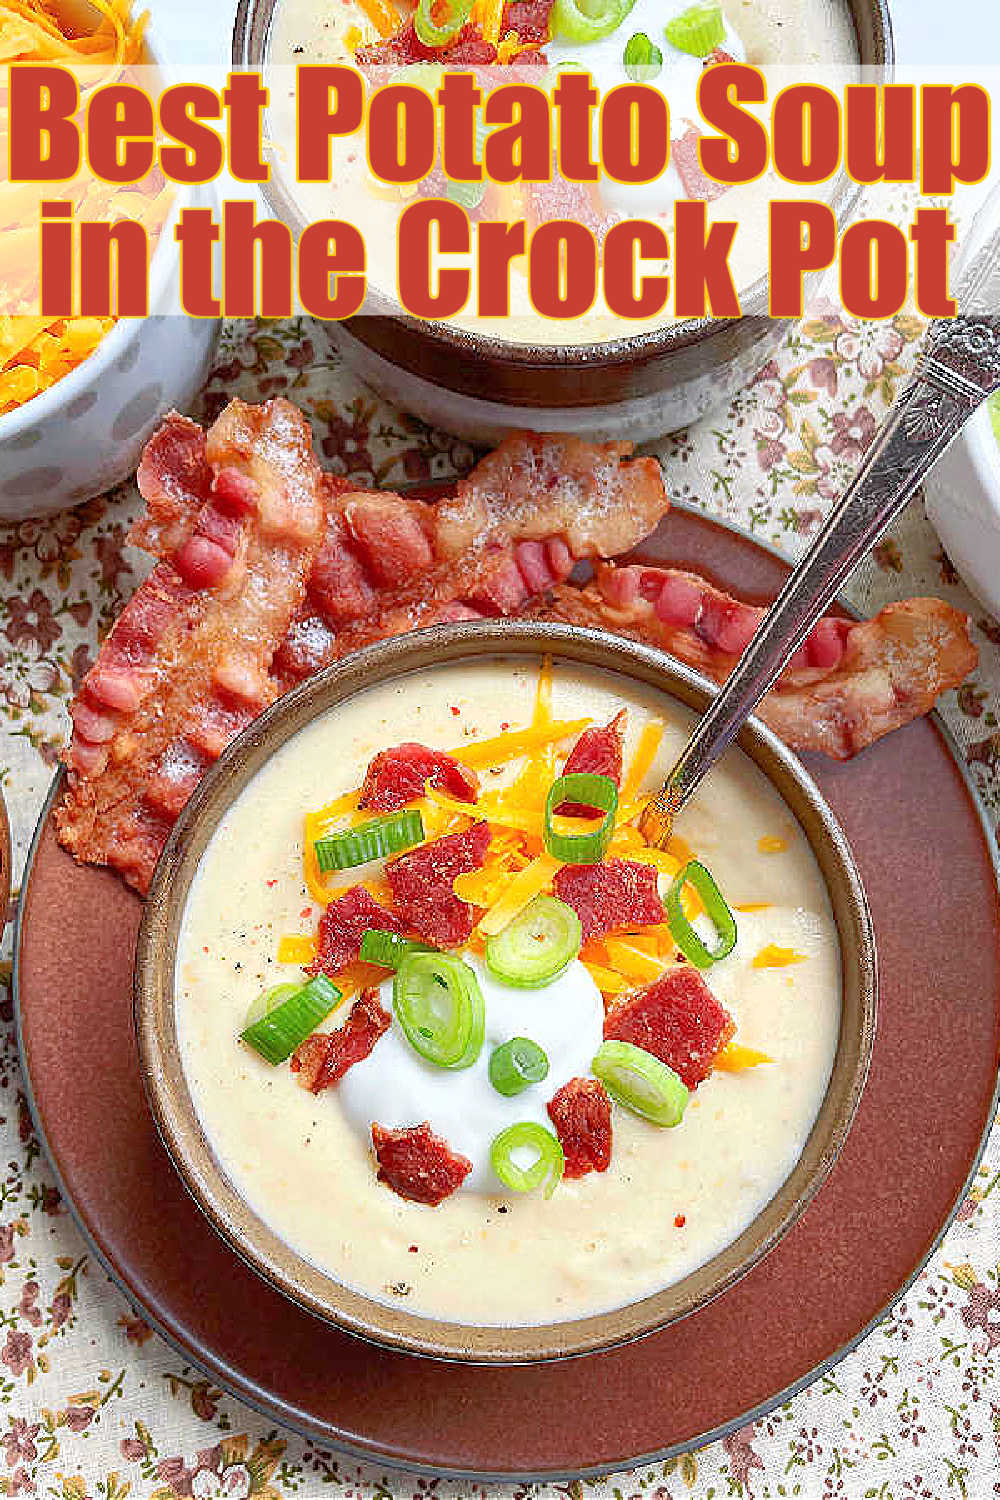 Potato Soup in the Crockpot